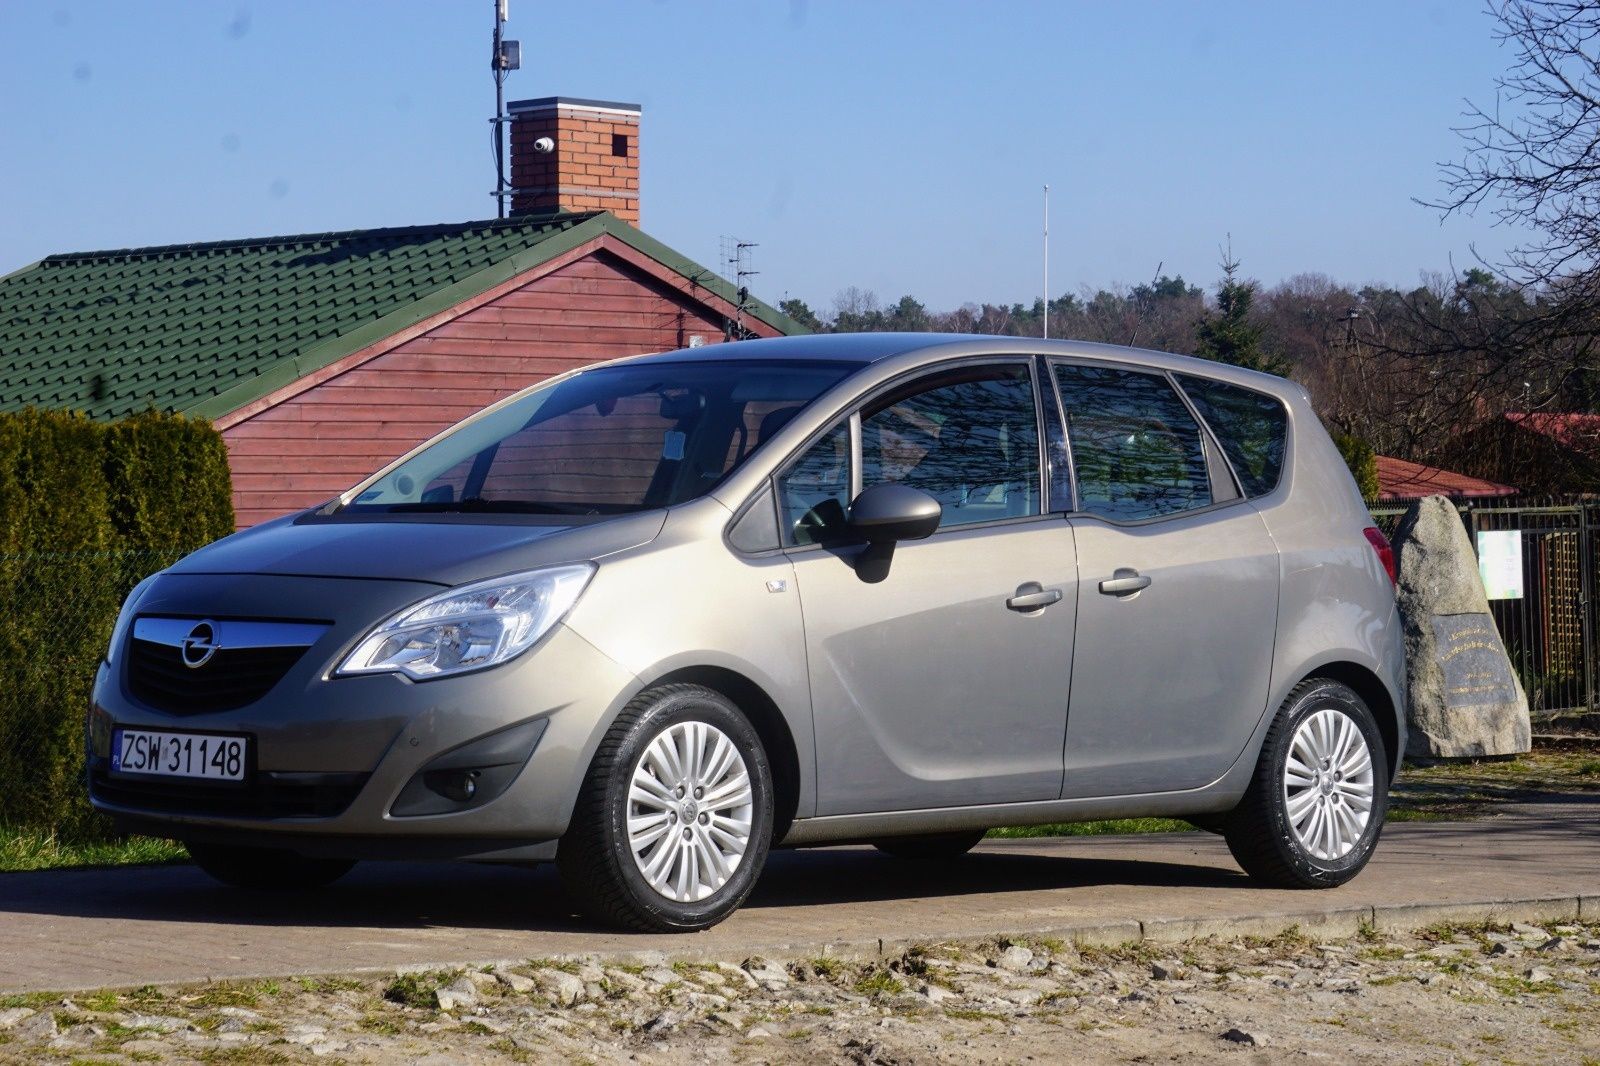 Sprzedam Opel Meriva minivan zamiana